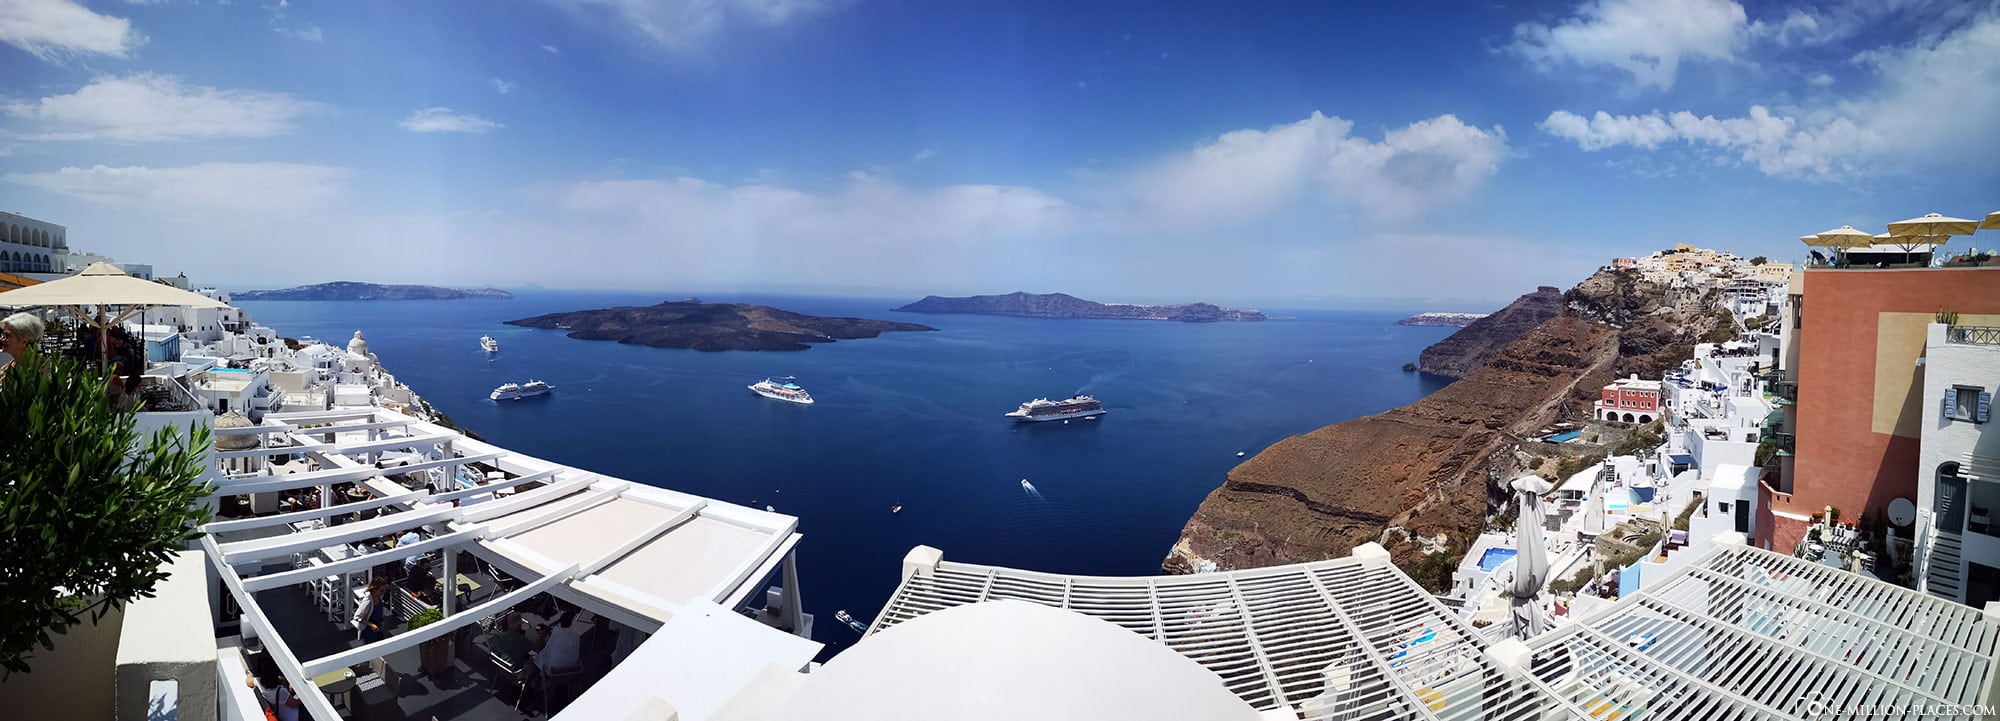 Panoramic view, Fira, Caldera, Thira, Santorini, Greek Islands, Greece, Cruise, Travel Report